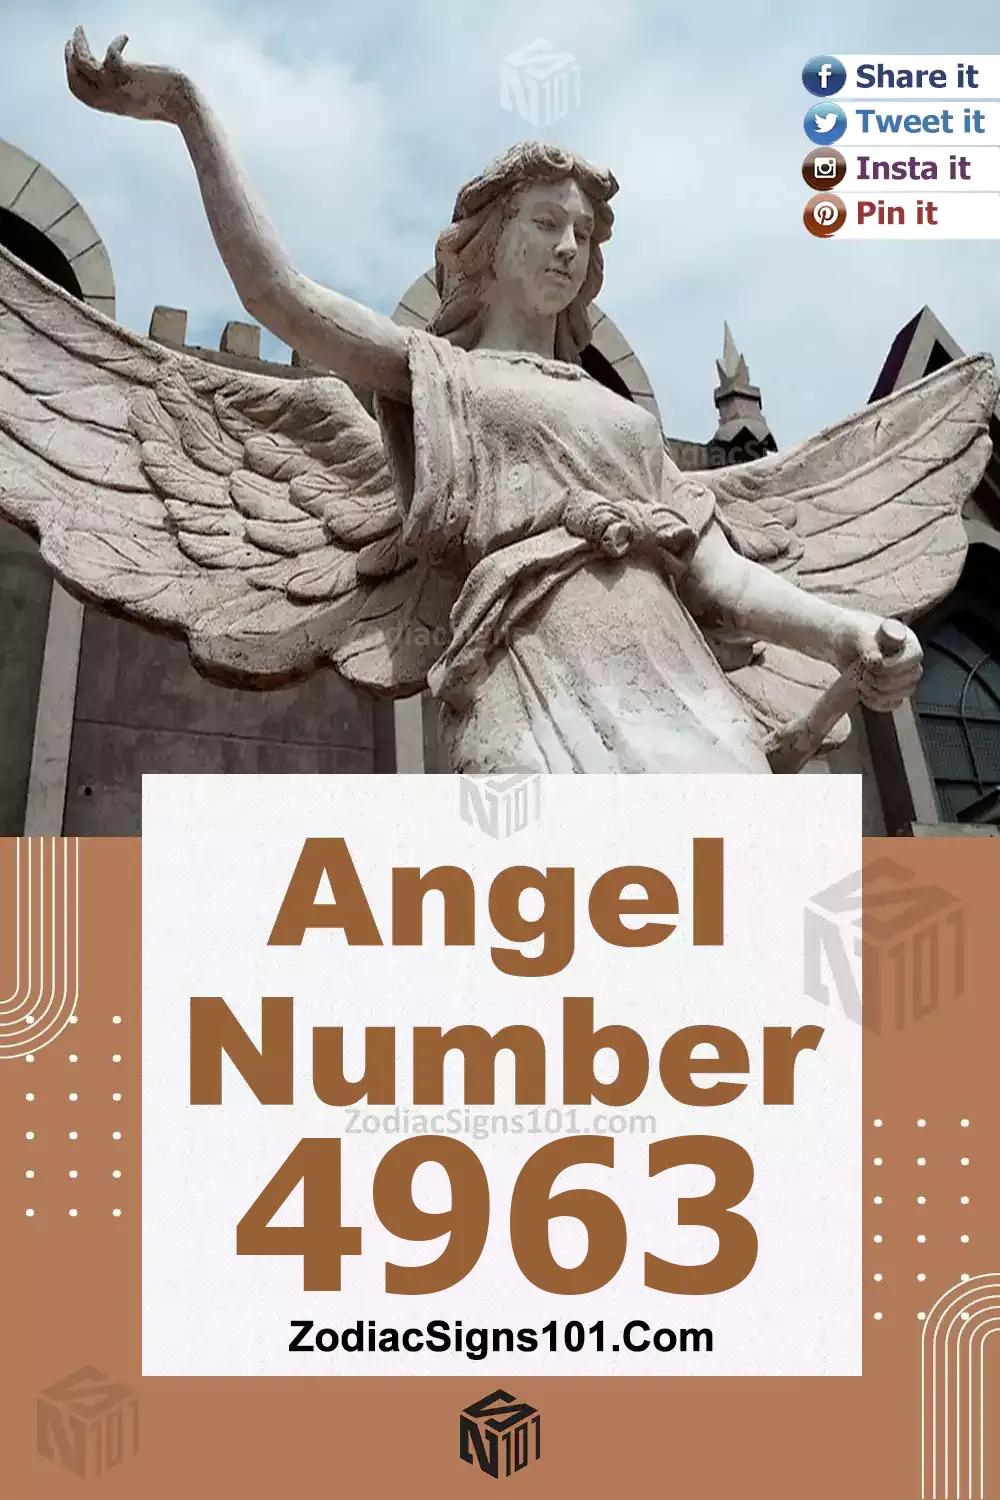 4963-Angel-Number-Meaning.jpg